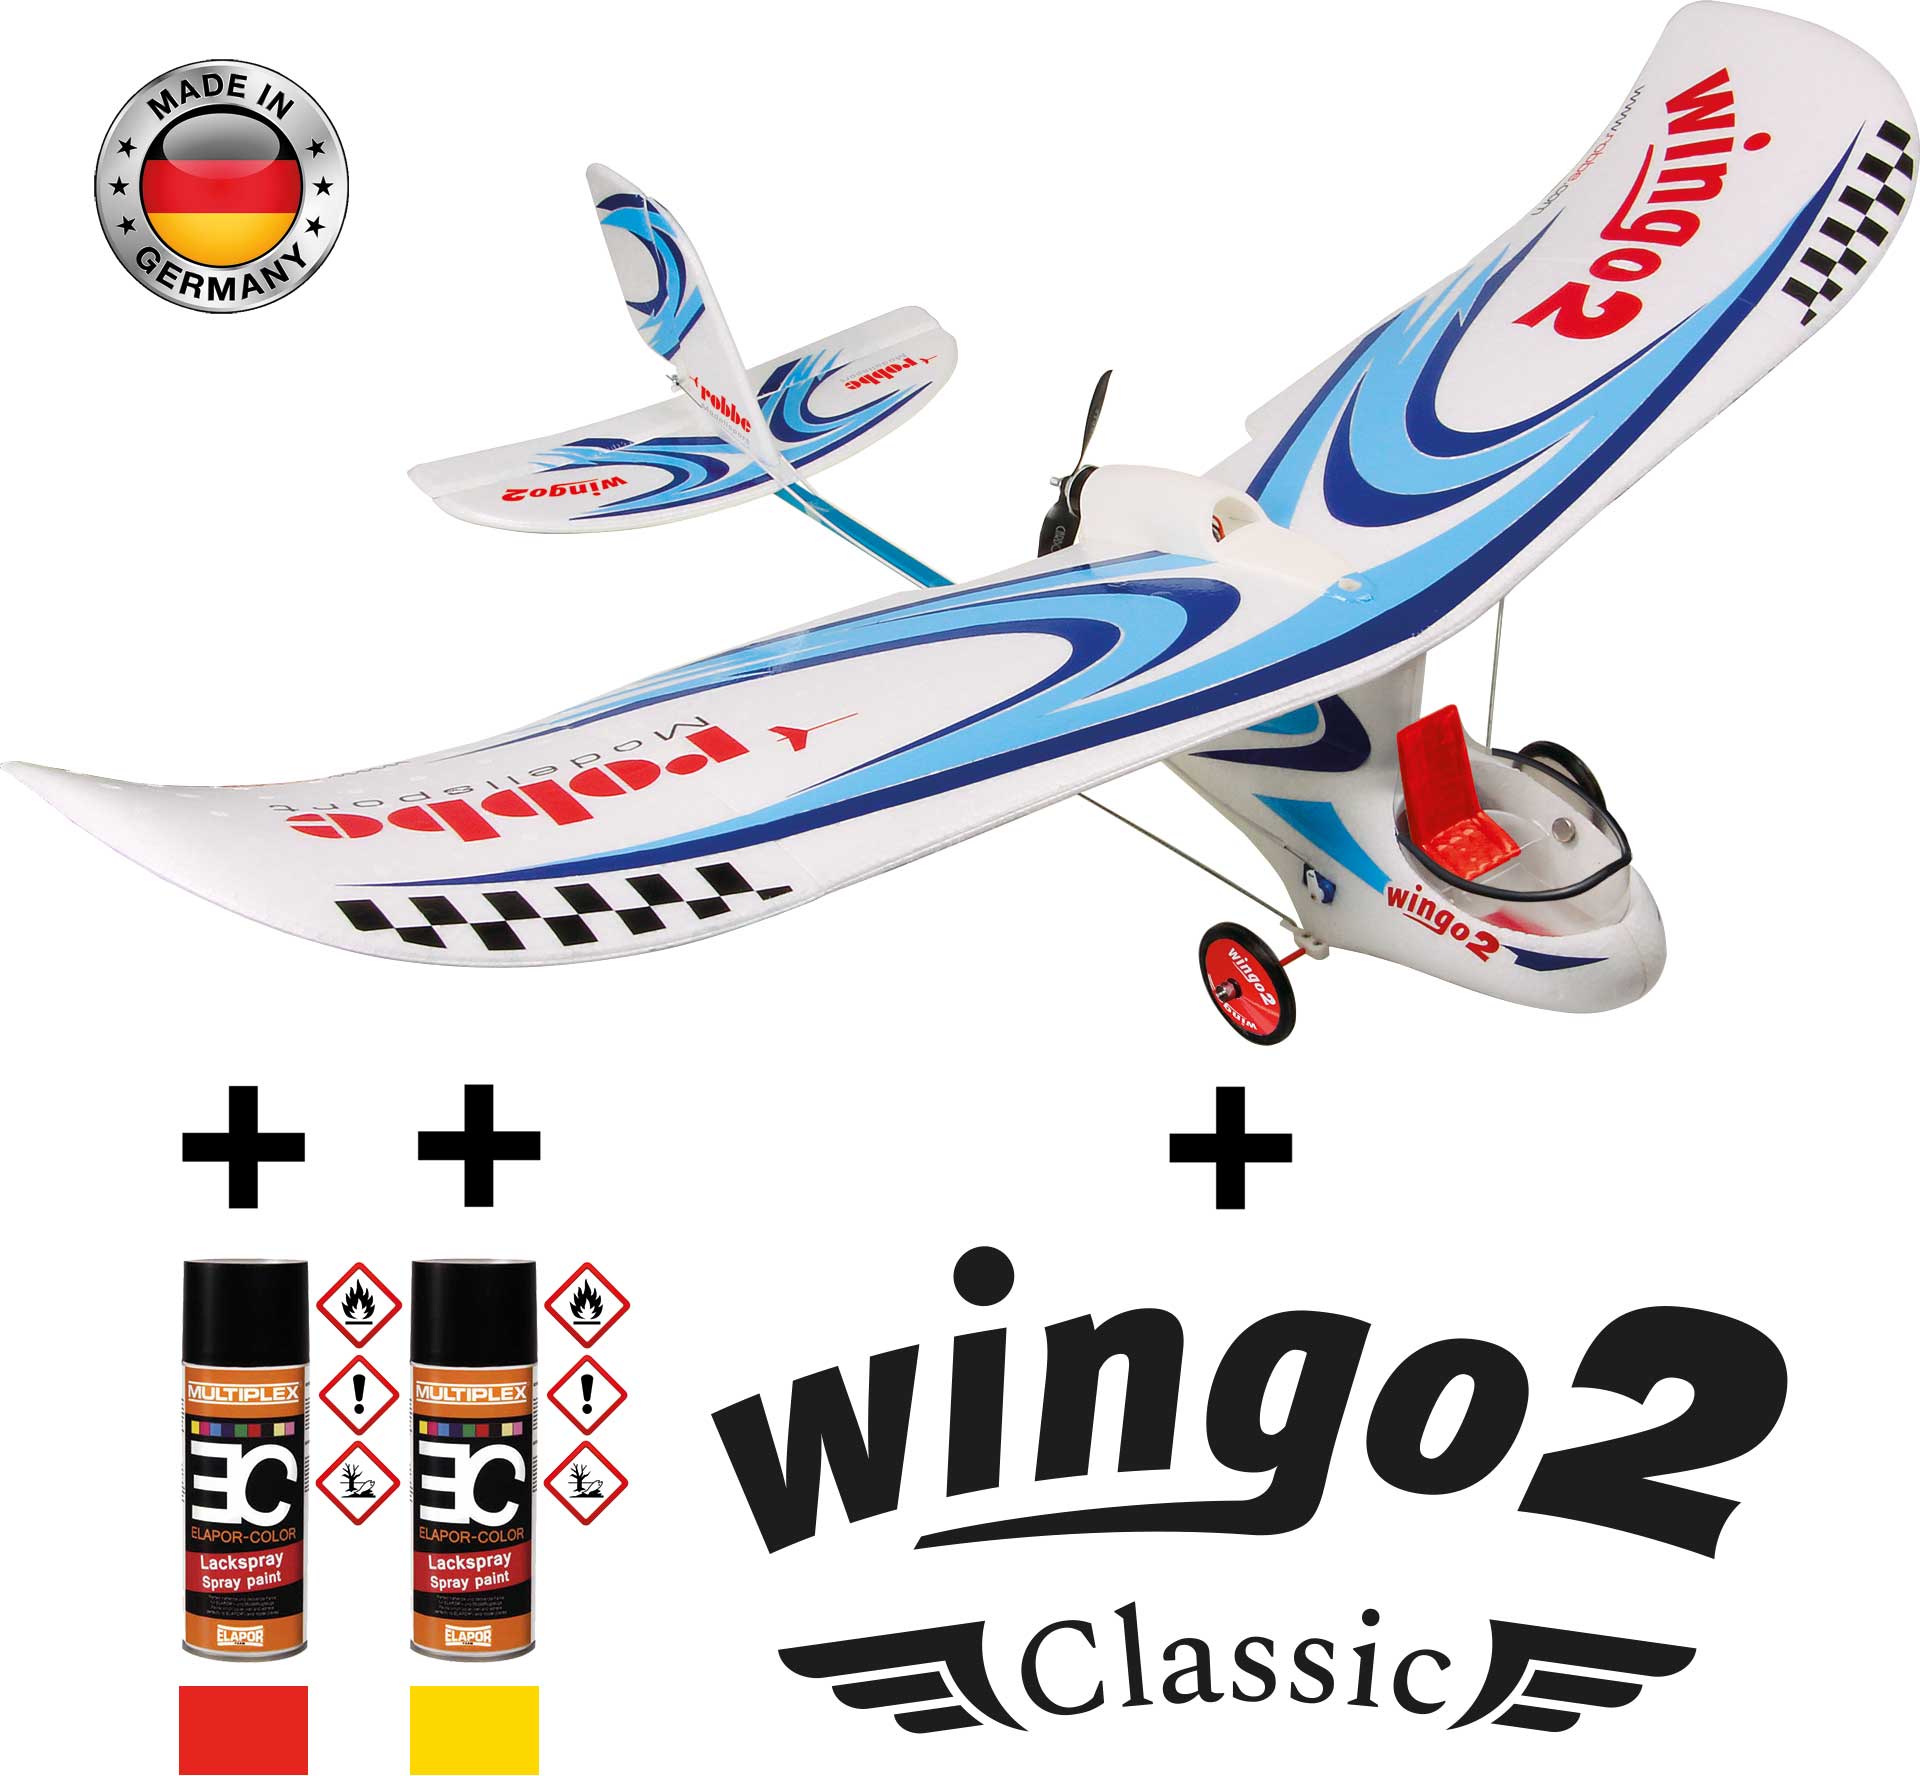 Robbe Modellsport Wingo 2 Kit "Classic" Sonderversion mit "Classic" Dekorsatz und Farbspray rot/gelb